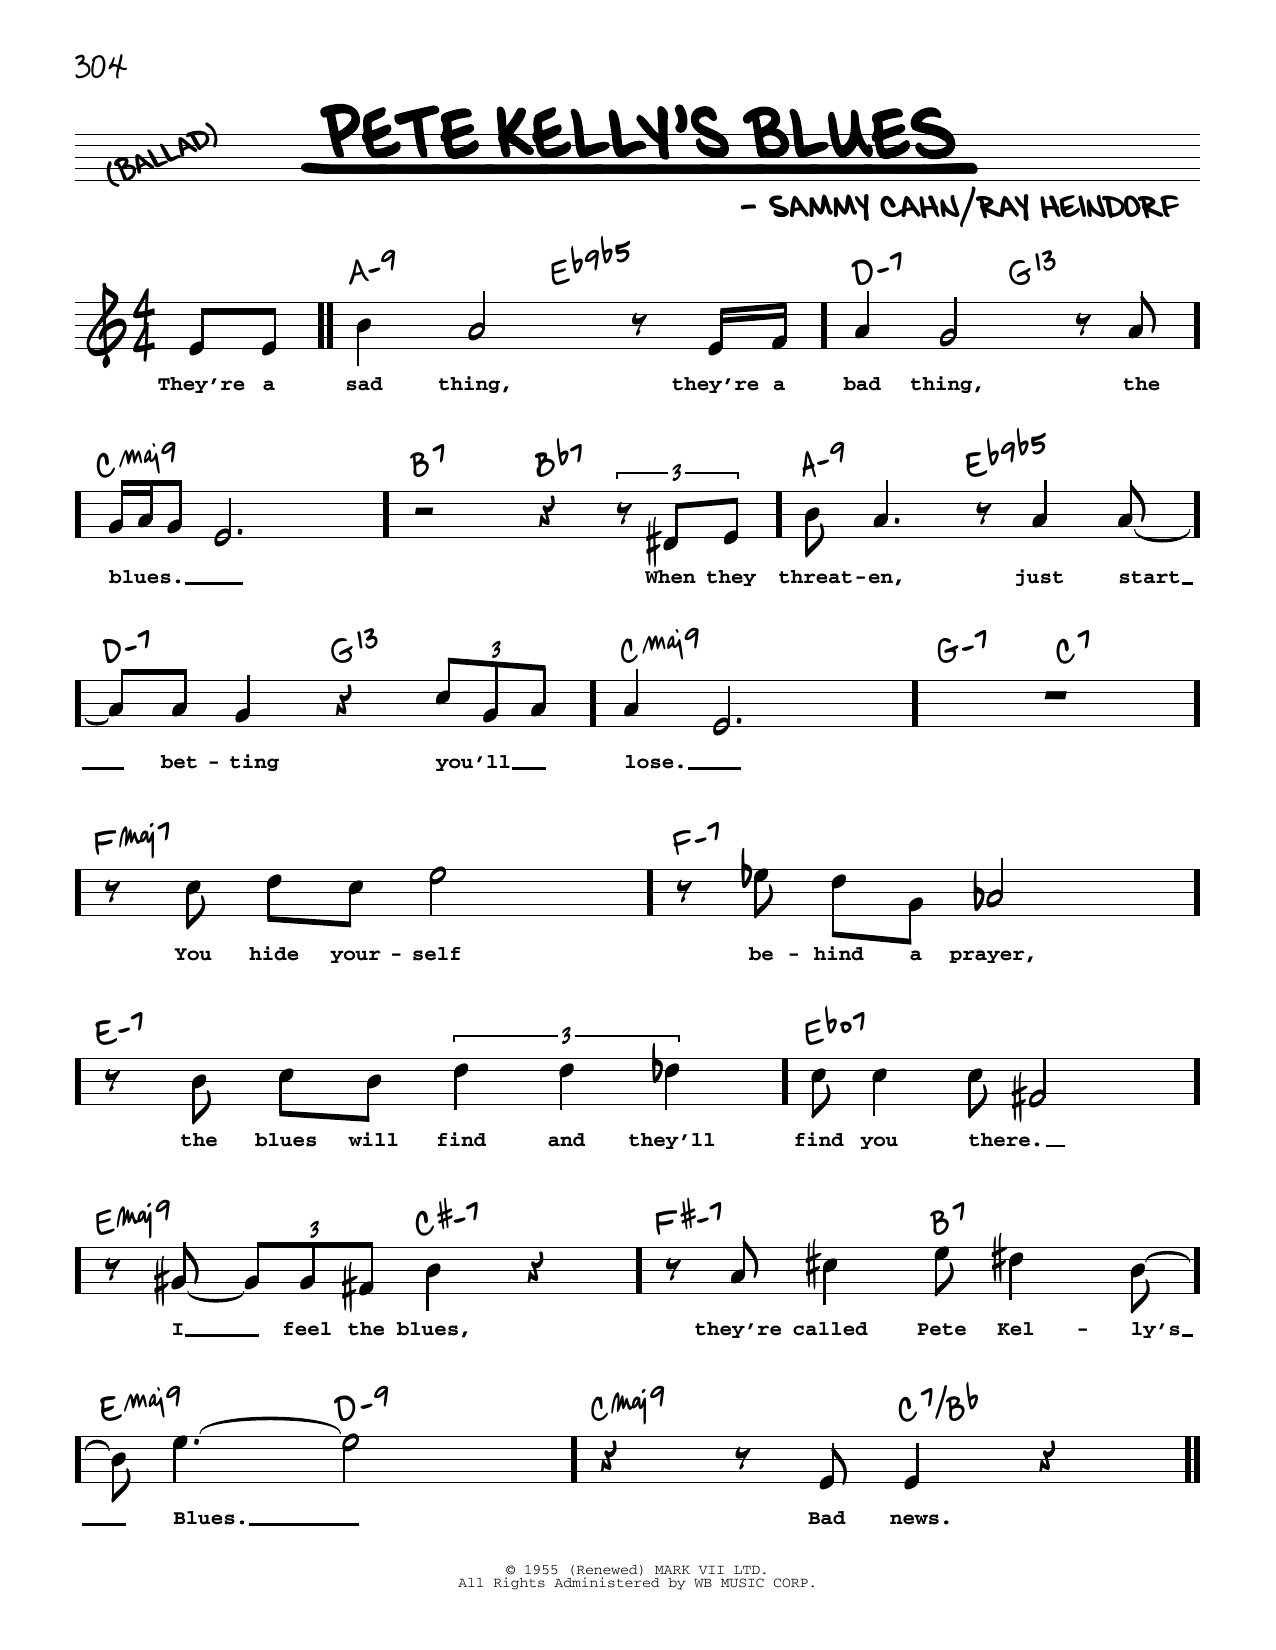 Download Sammy Cahn Pete Kelly's Blues (High Voice) Sheet Music